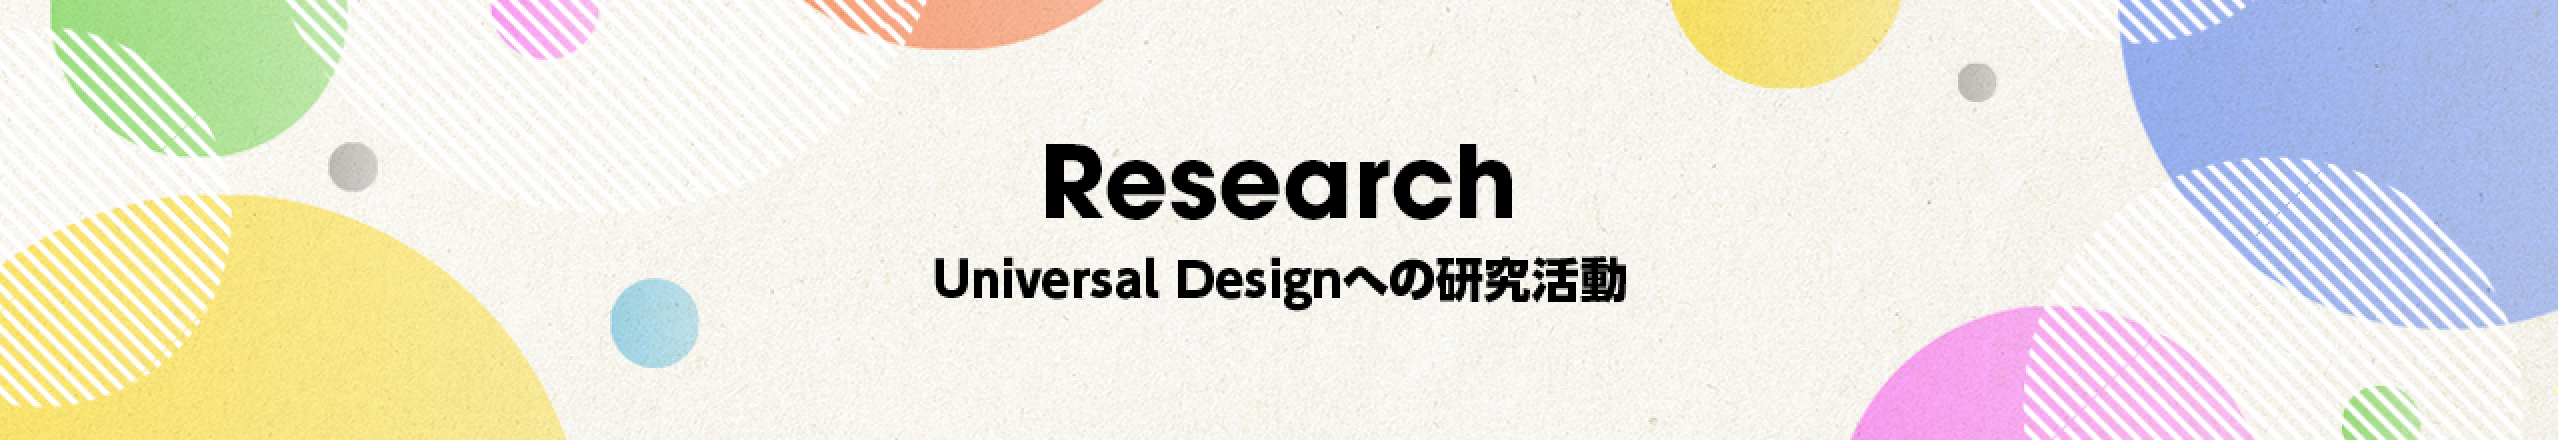 Research Universal Designへの研究活動